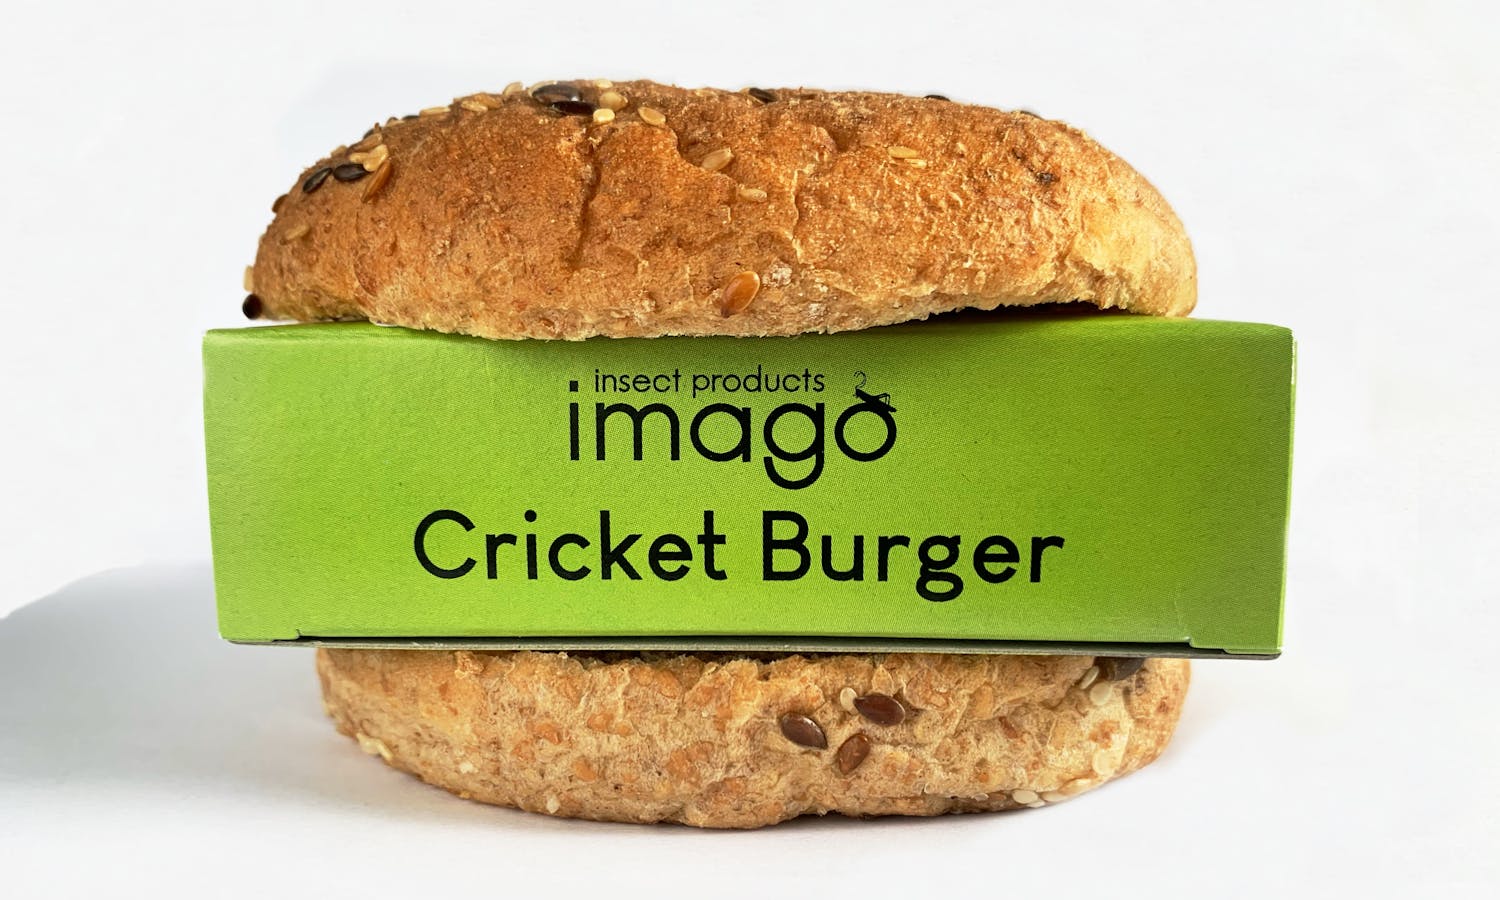 Imago Cricket Burger package wrapped in a burger bun